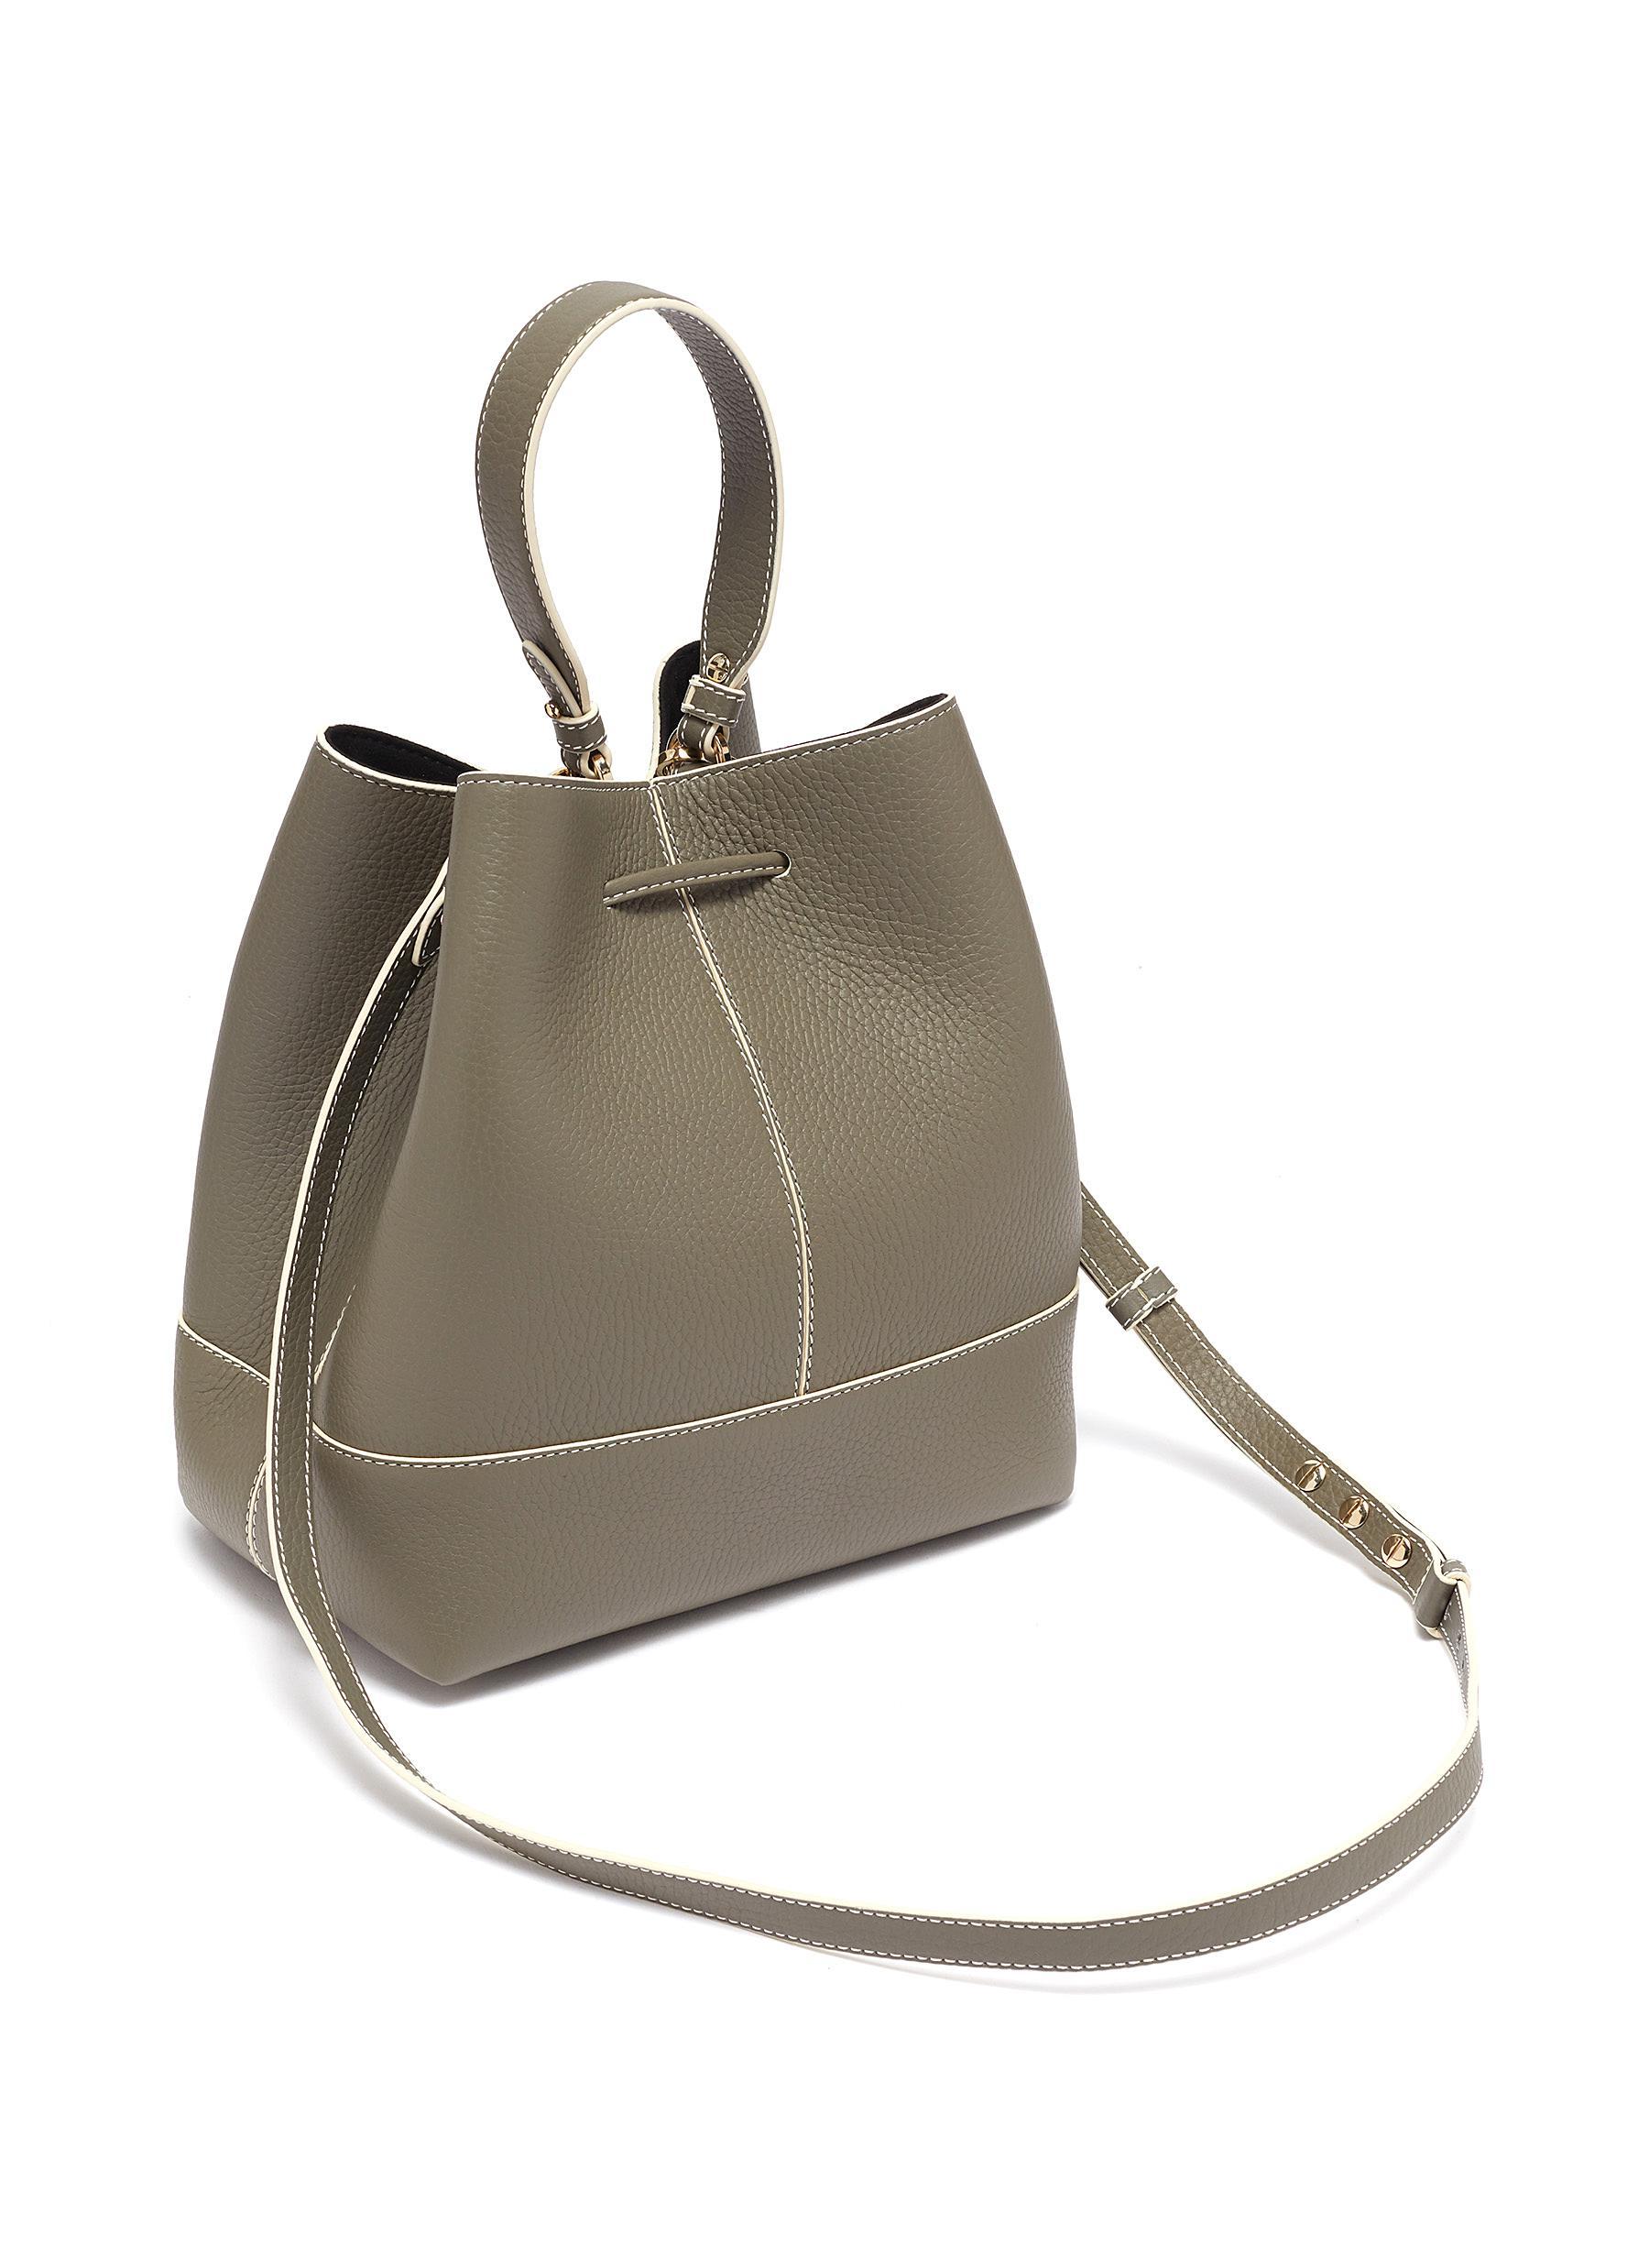 Strathberry - Lana Osette - Leather Mini Bucket Bag - Burgundy